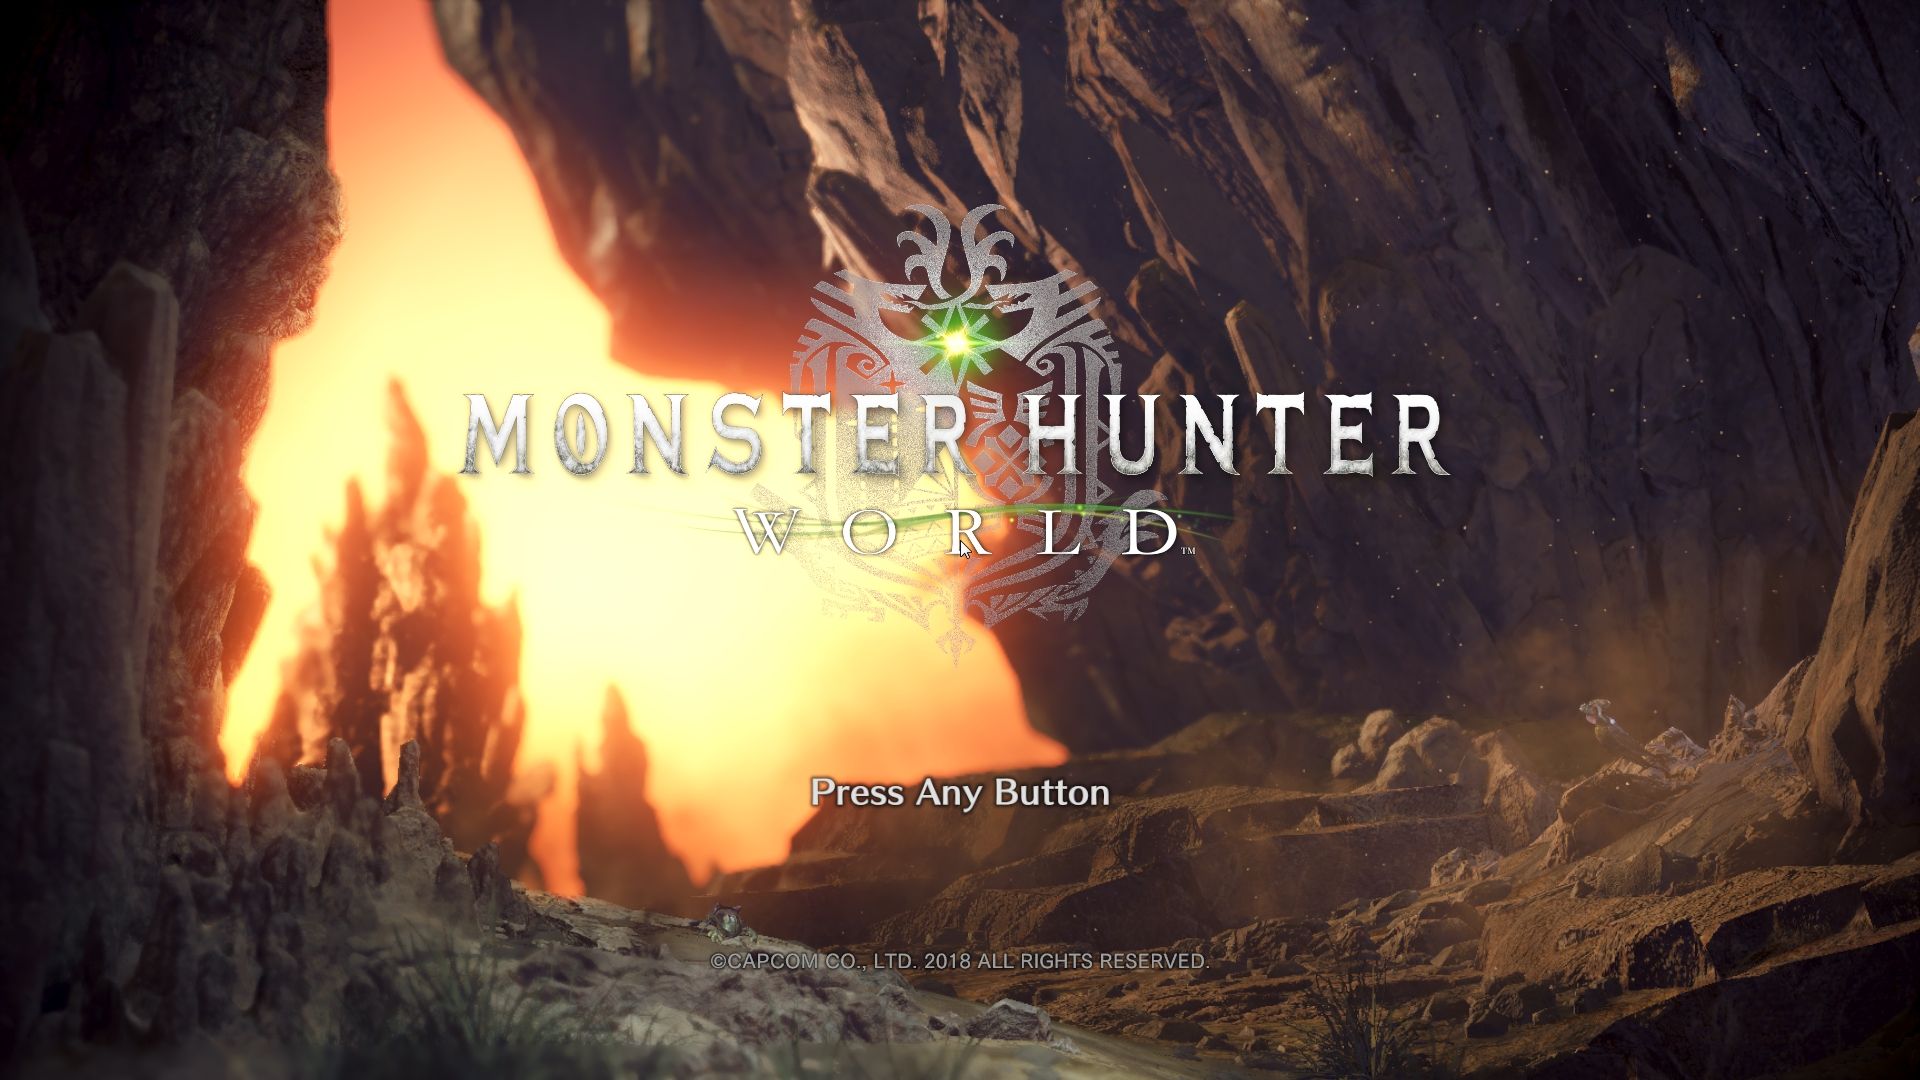 Steam 版 Monster Hunter World でデュアルショック 4 コントローラーのタッチパッドとトリガーボタン設定を最適化する方法 Awgs Foundry